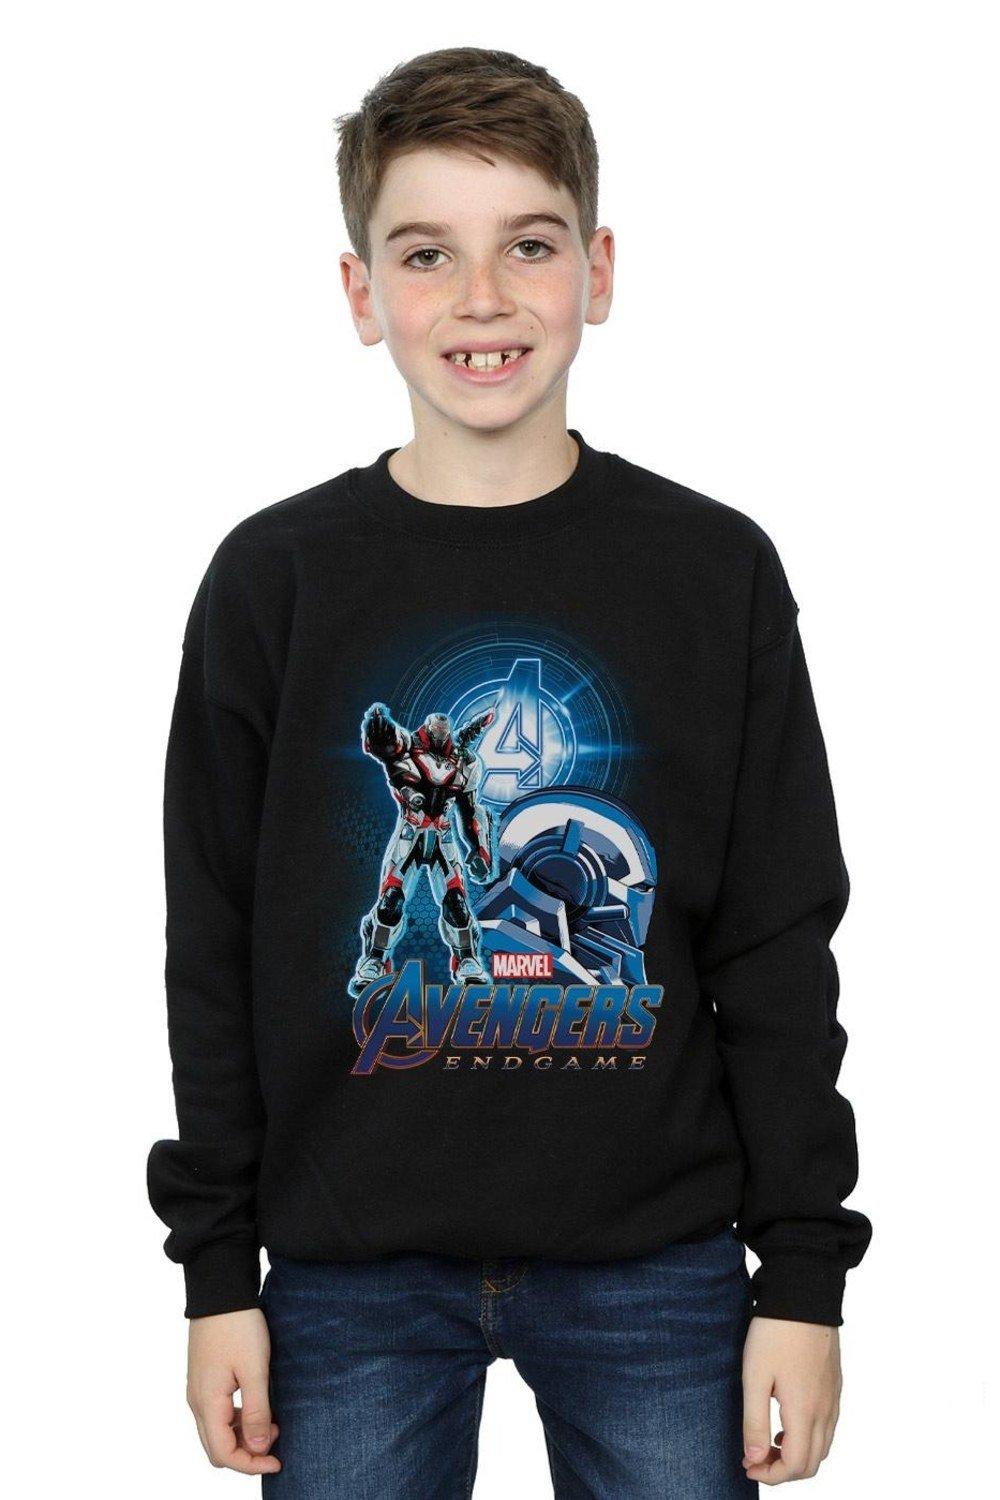 Avengers Endgame War Machine Team Suit Sweatshirt